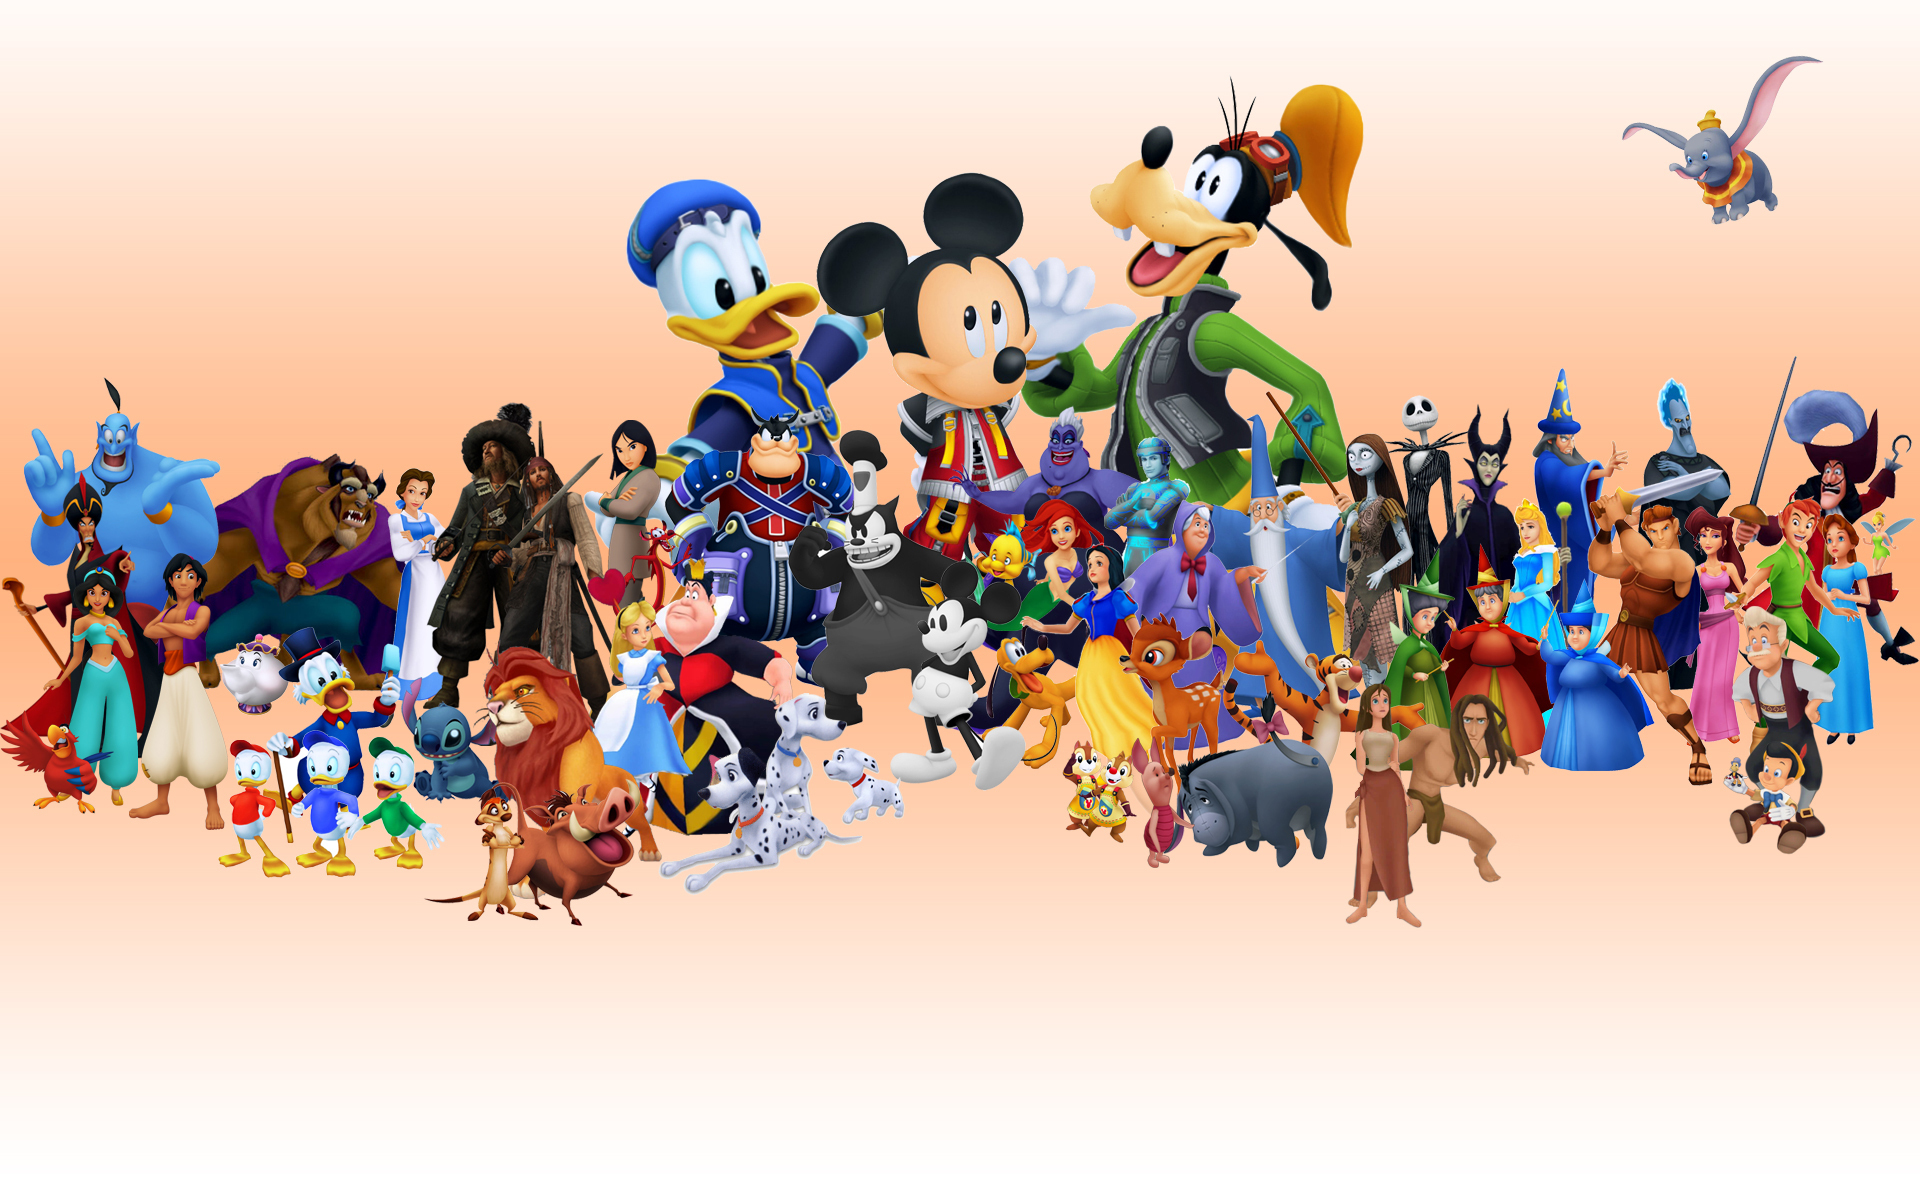 Download Free Disney Desktop Backgrounds Wallpaper pictures in high